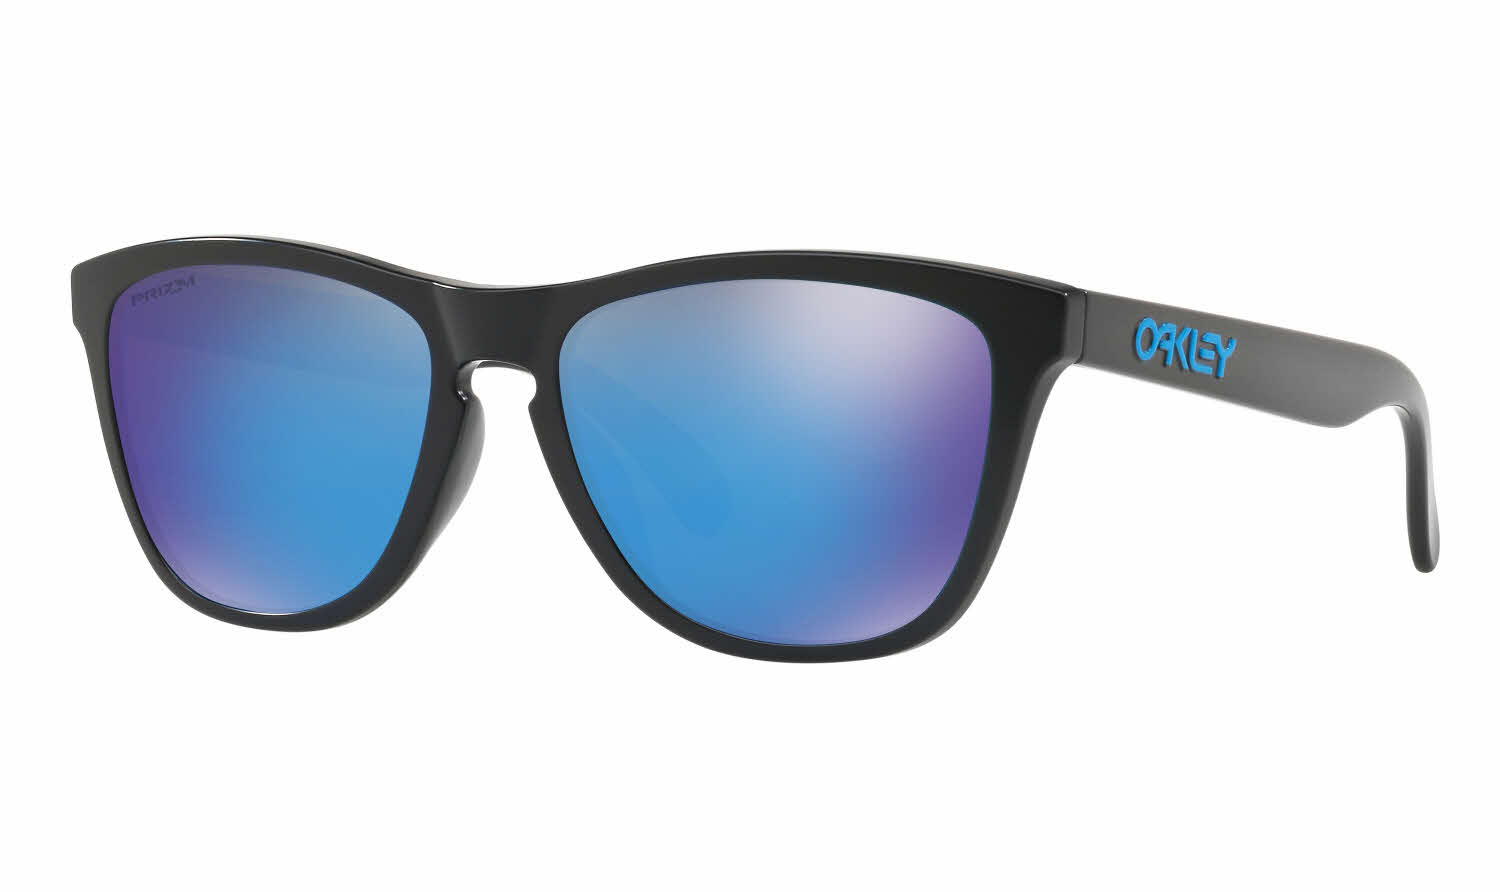 Oakley Frogskins - Alternate Fit Sunglasses